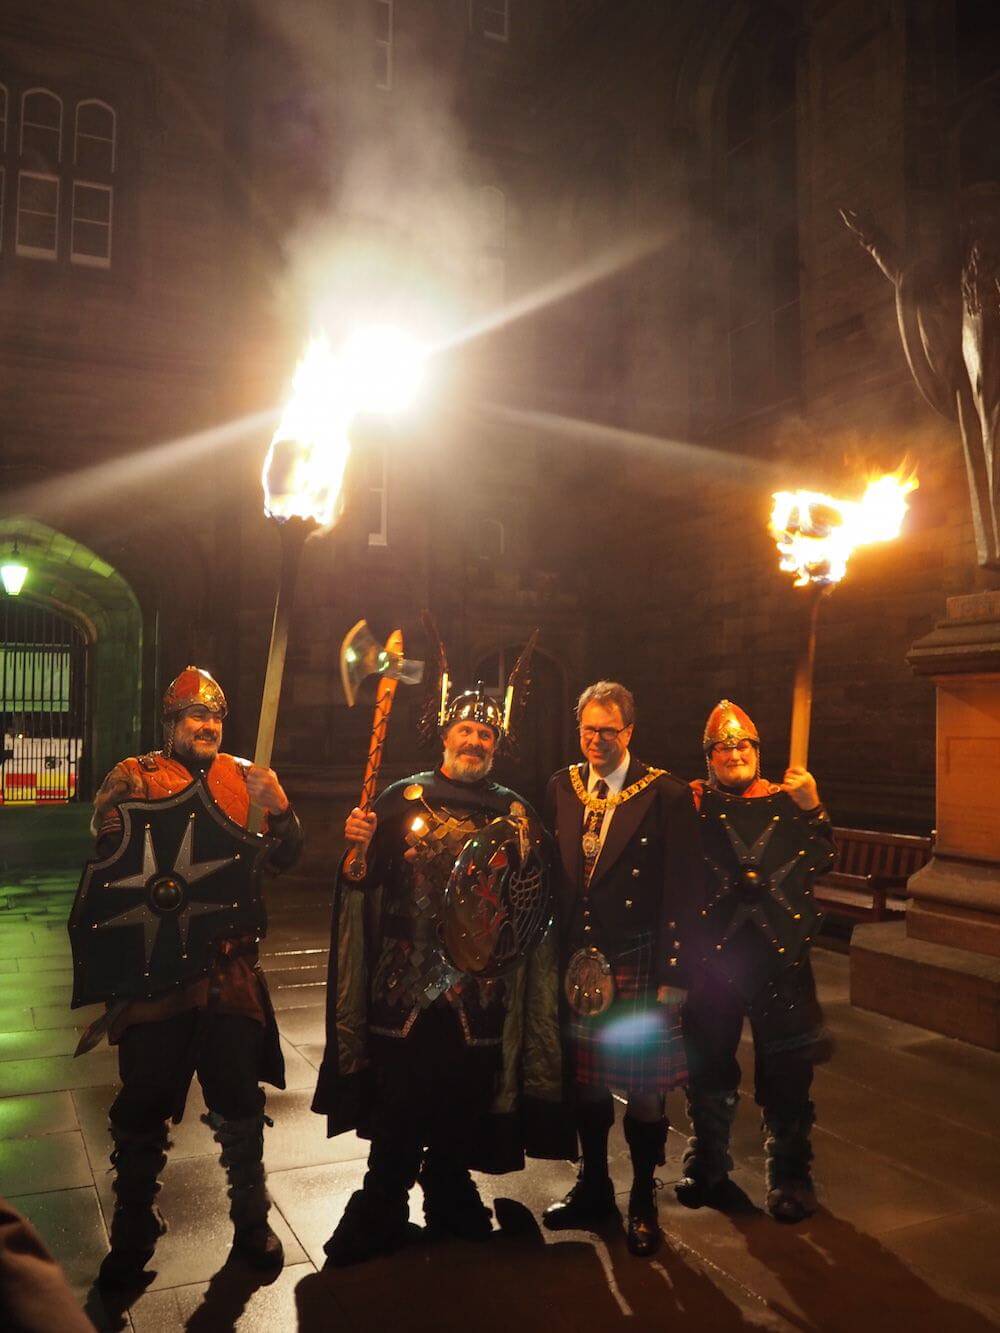 Torchlight Procession Vikings 